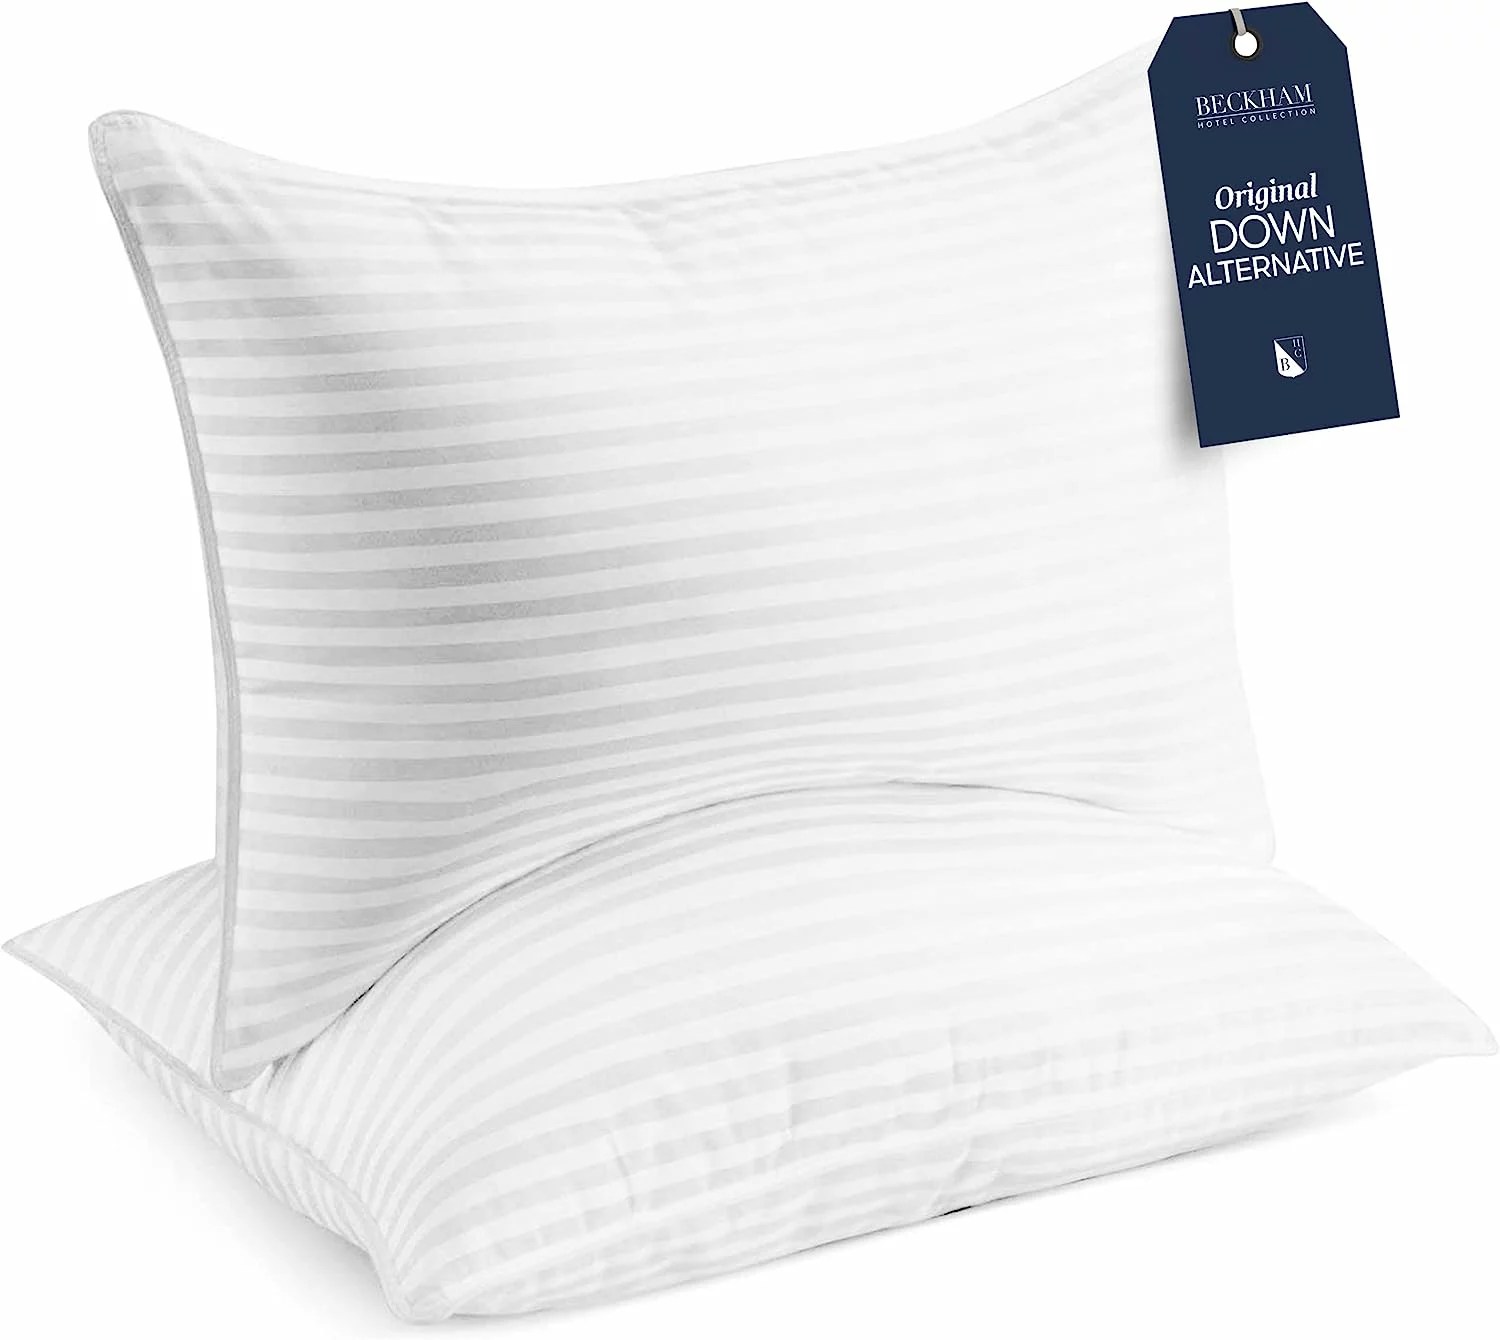 beckham hotel collection bed pillows